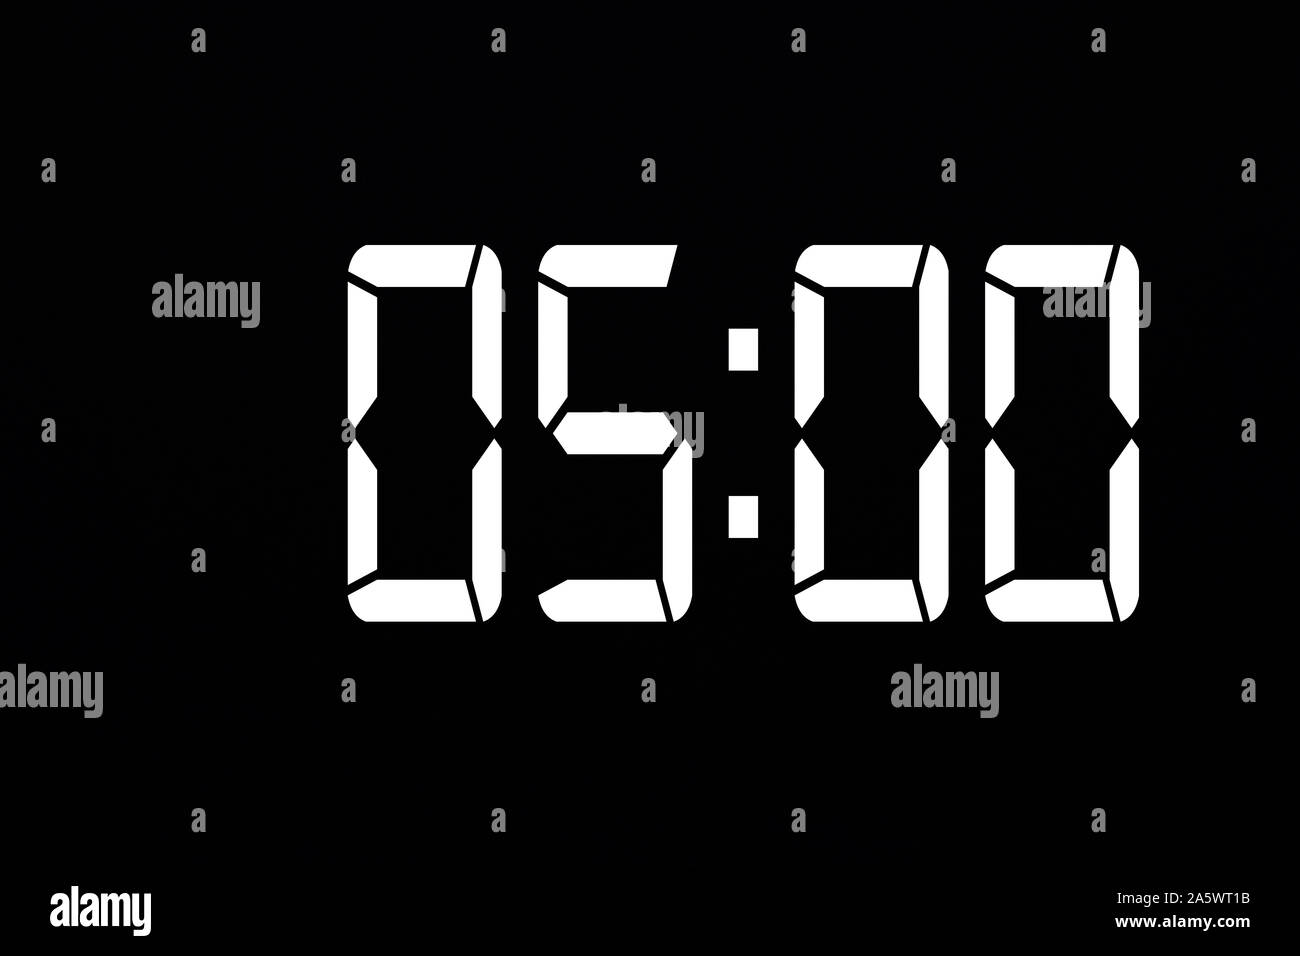 Showing time 05:00 on white led digital clock isolated black background Stock Photo